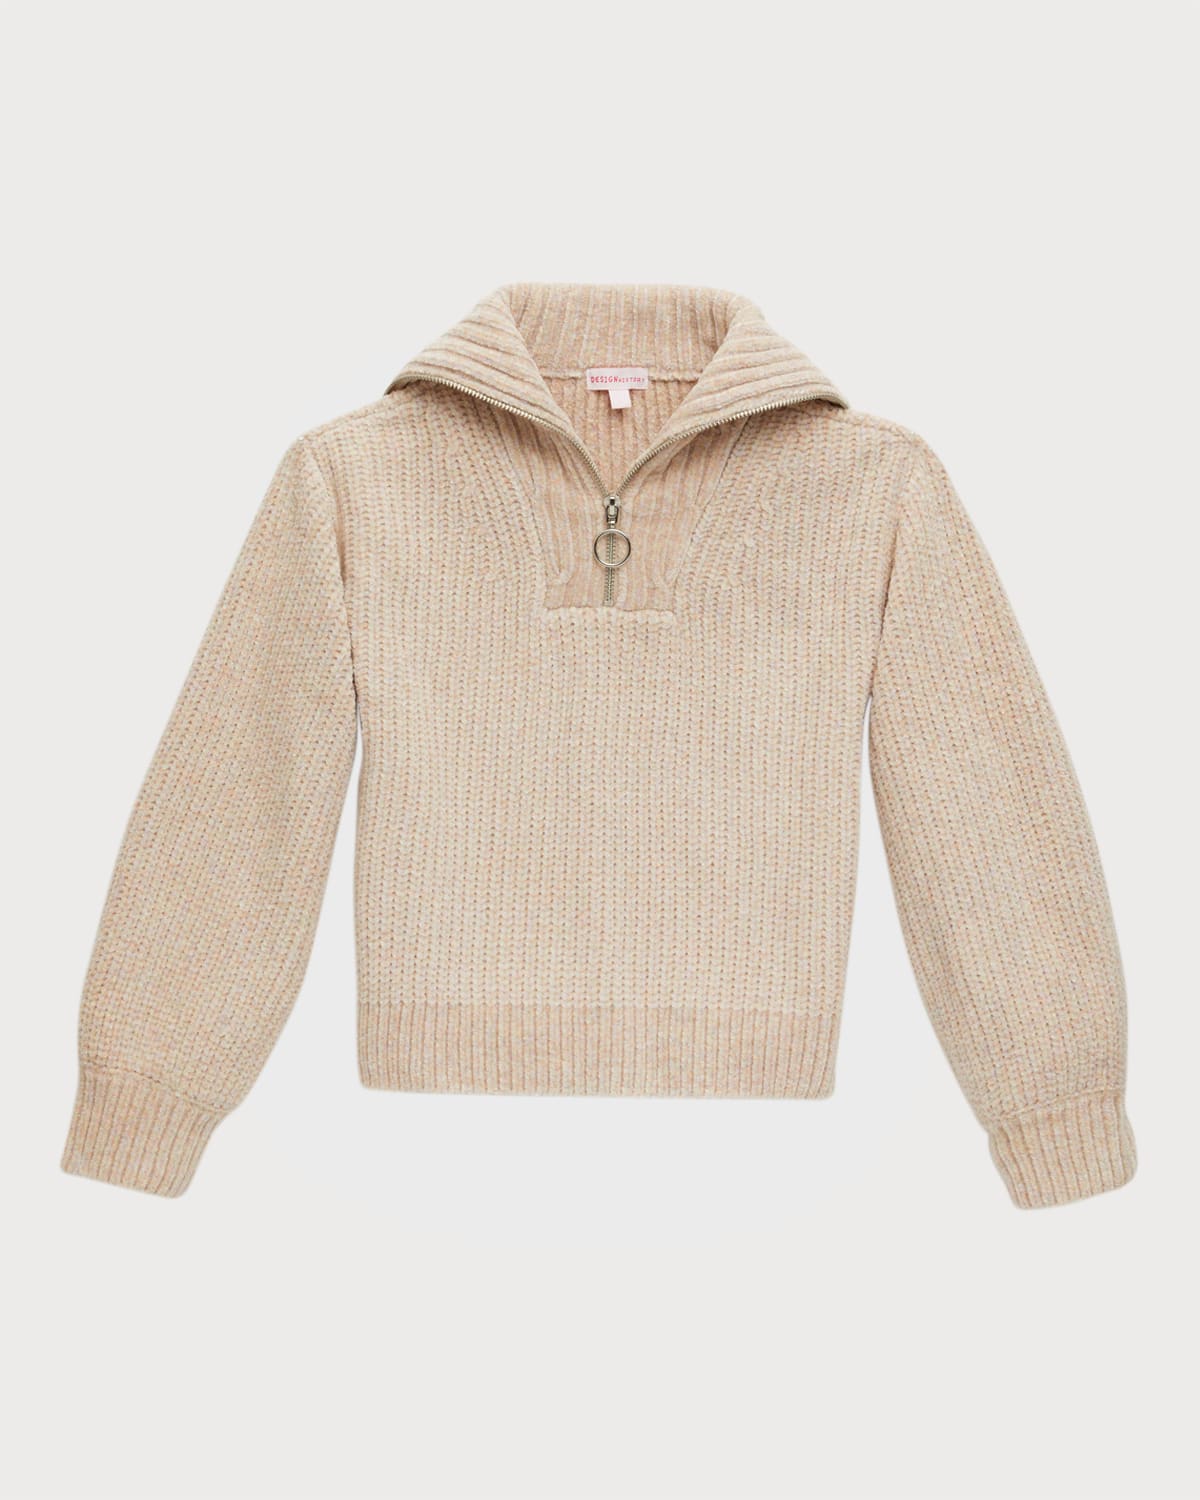 Girl's Half Zip Textured Sweater, Size S-XL